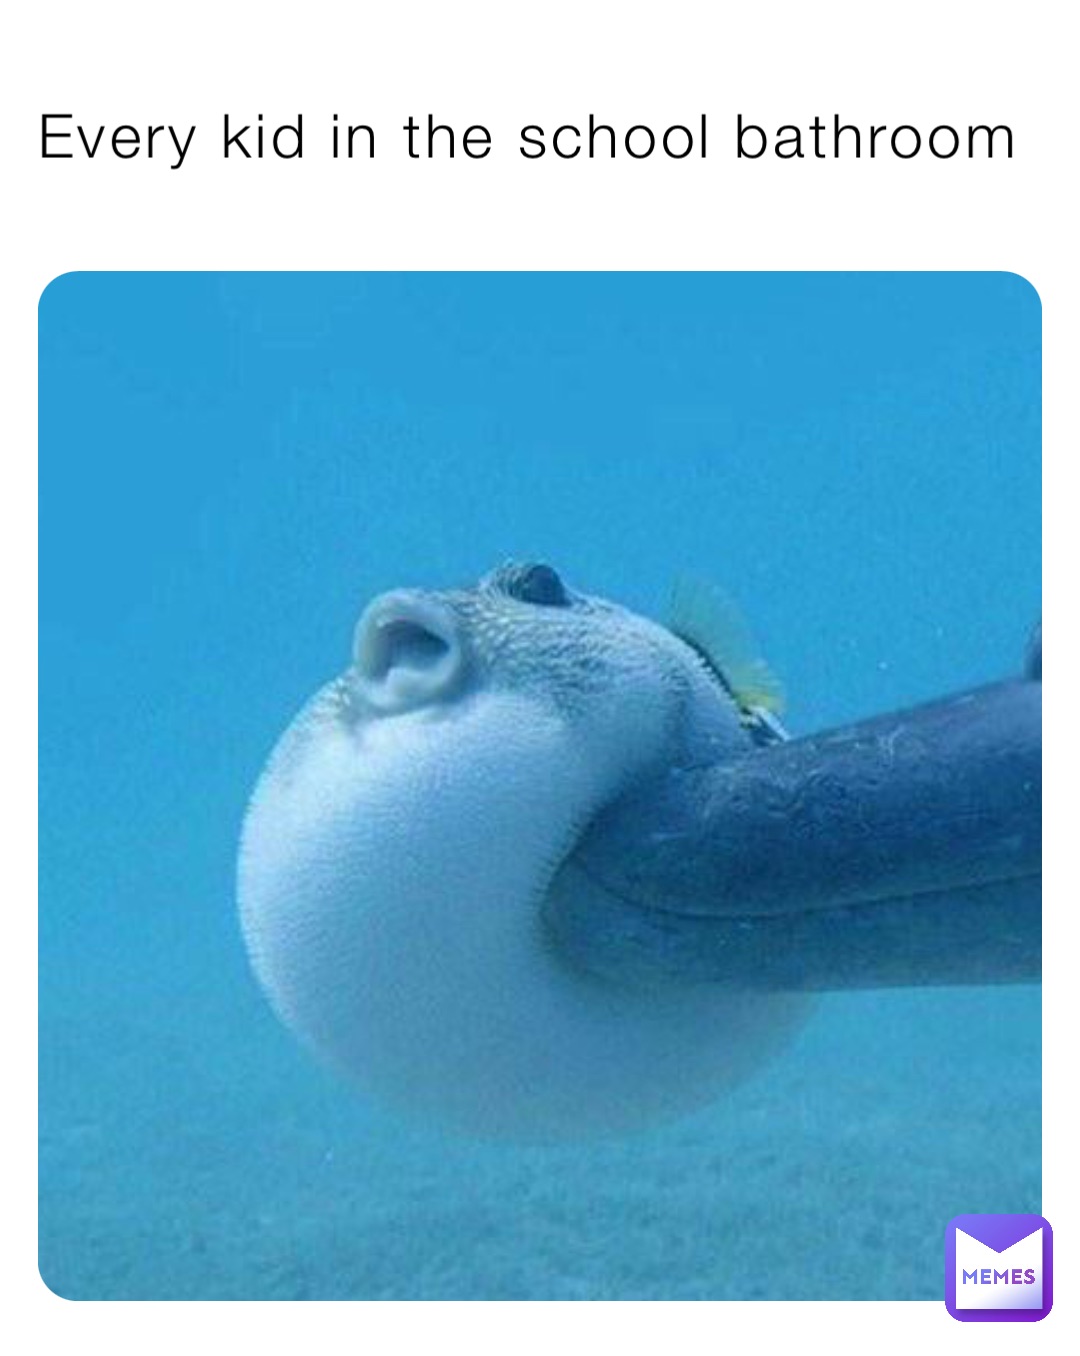 Every kid in the school bathroom | @I_eat_kids_edp445 | Memes